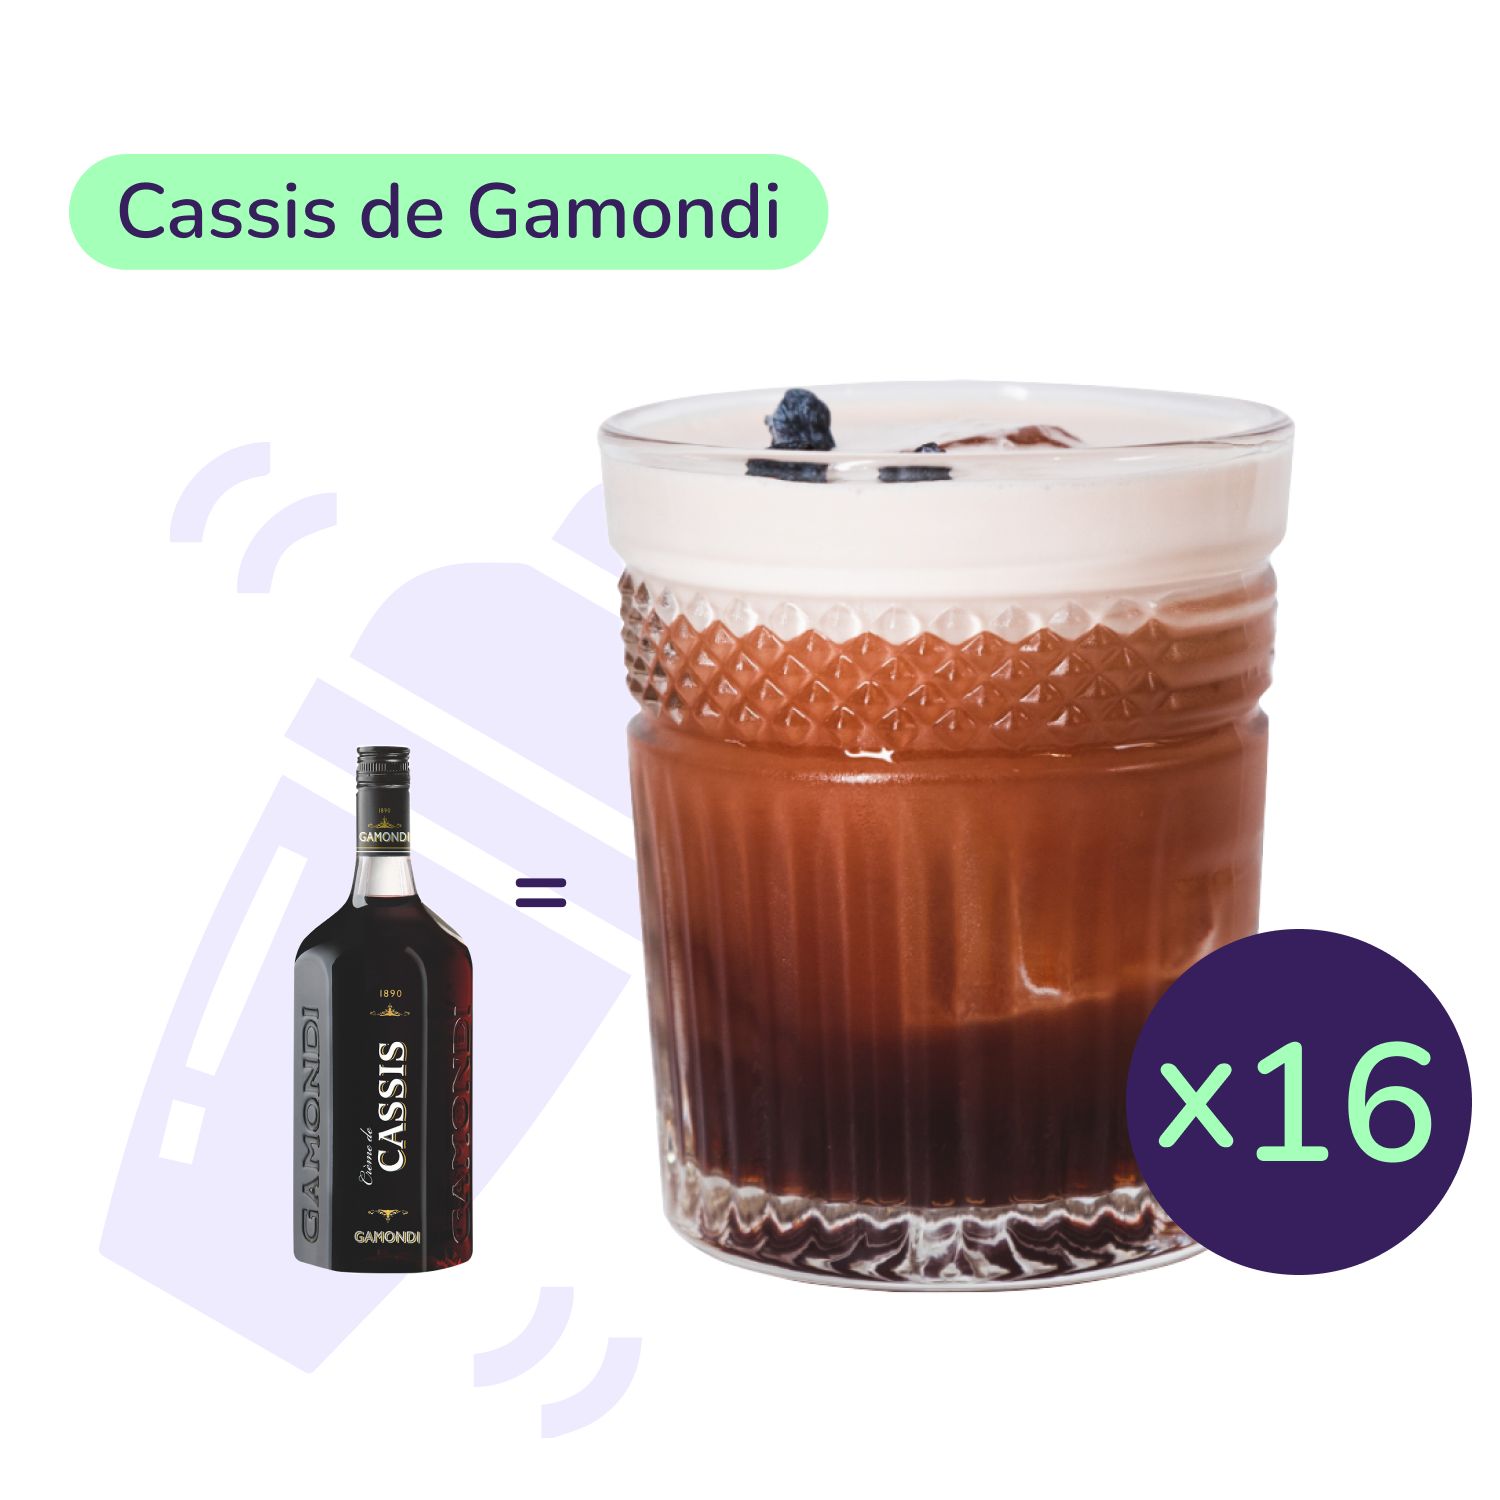 Коктейль Cassis de Gamondi (набор ингредиентов) х16 на основе Gamondi - фото 1